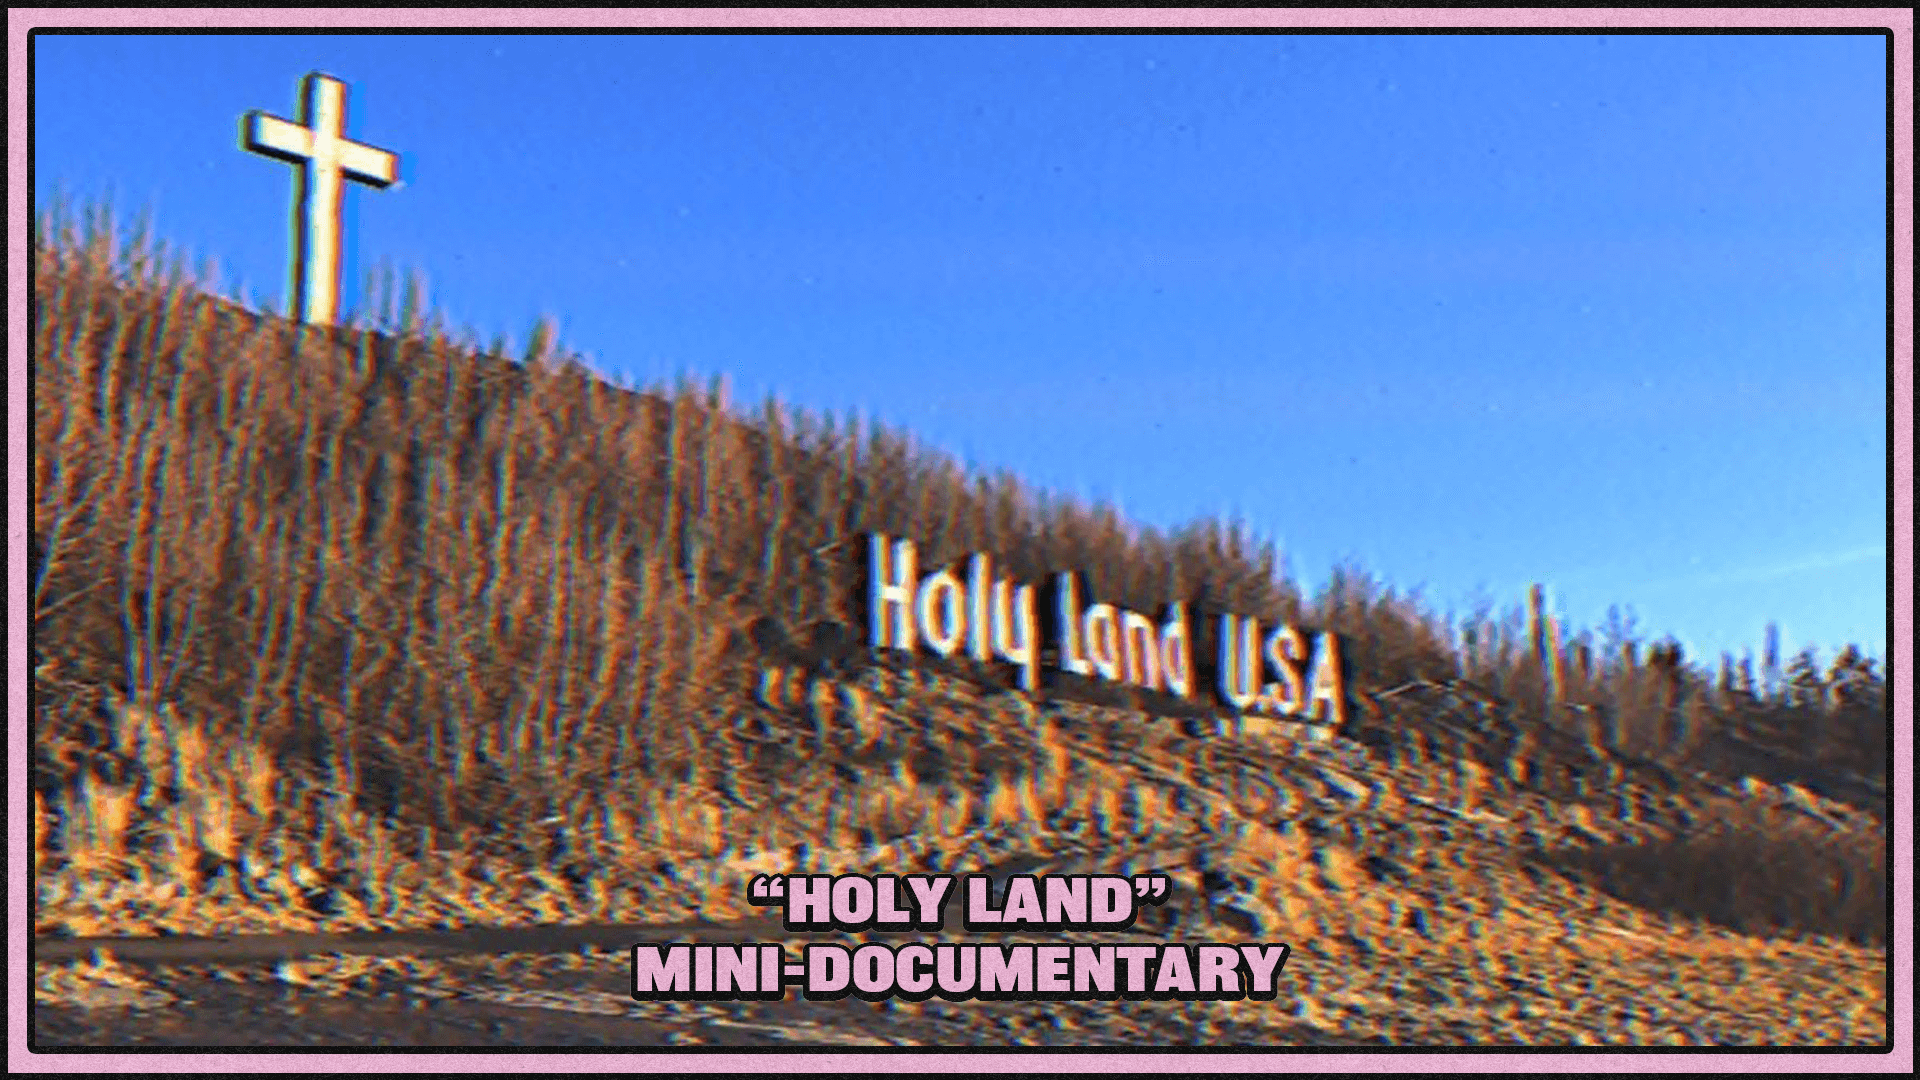 Holy-Land-USA-Documentary-Ben-Montez-Editor.png